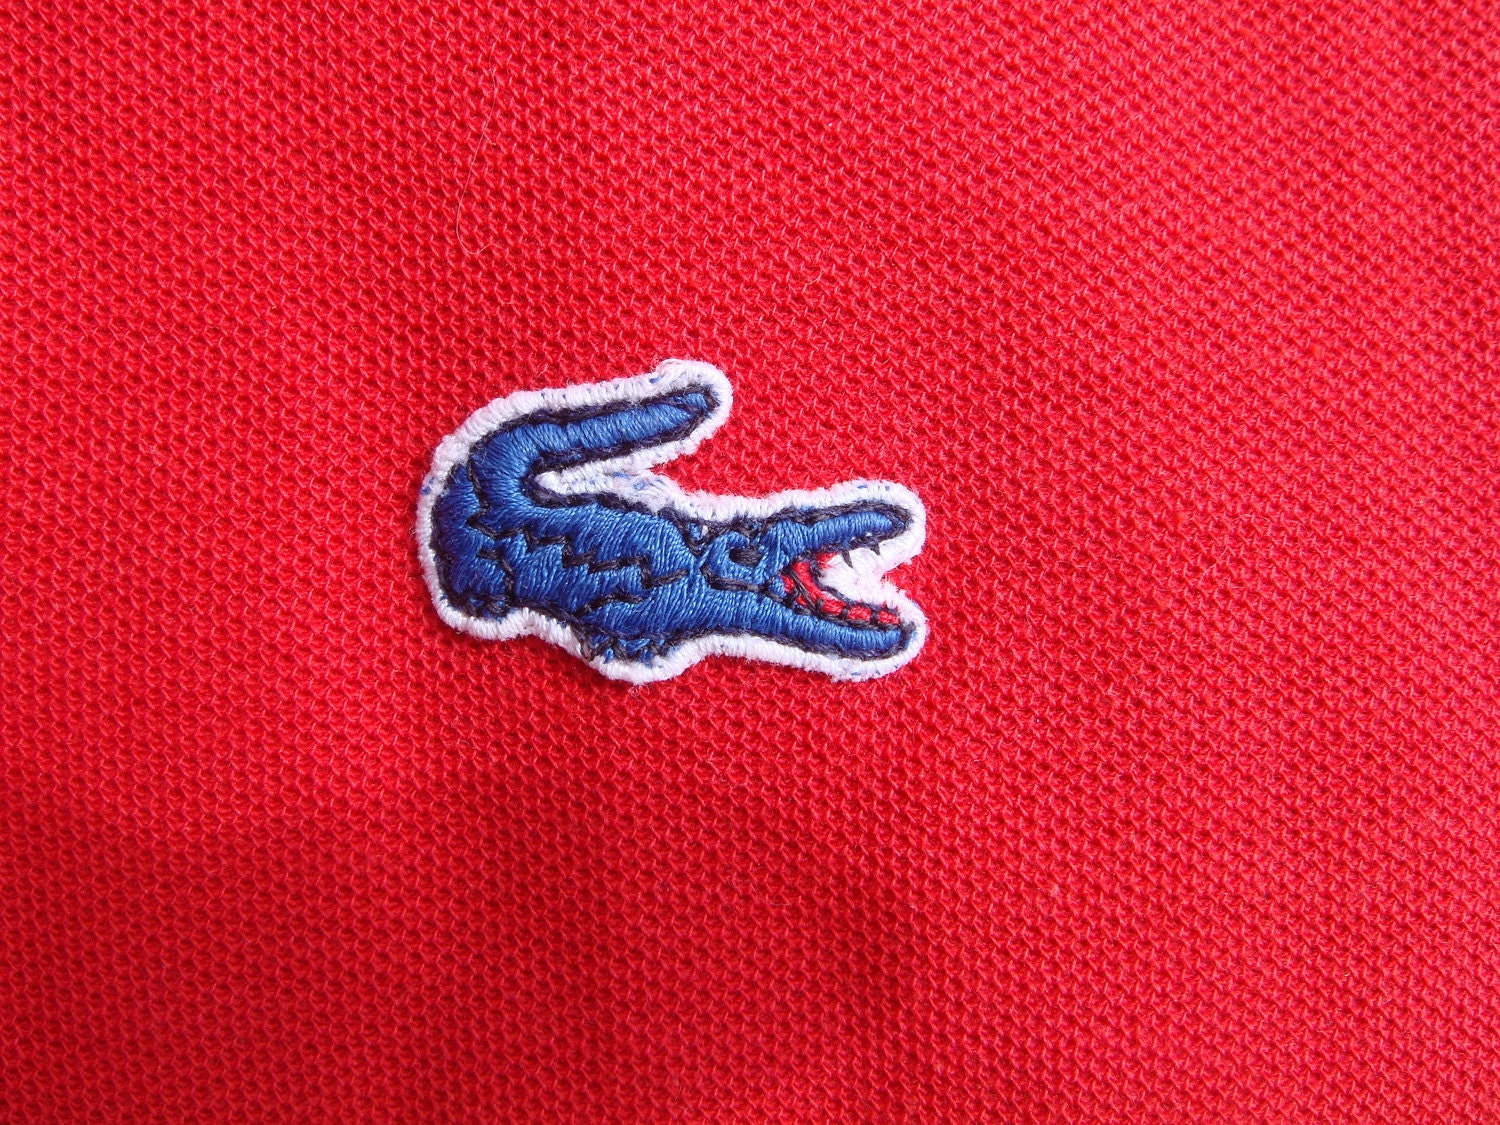 alligator logo izod